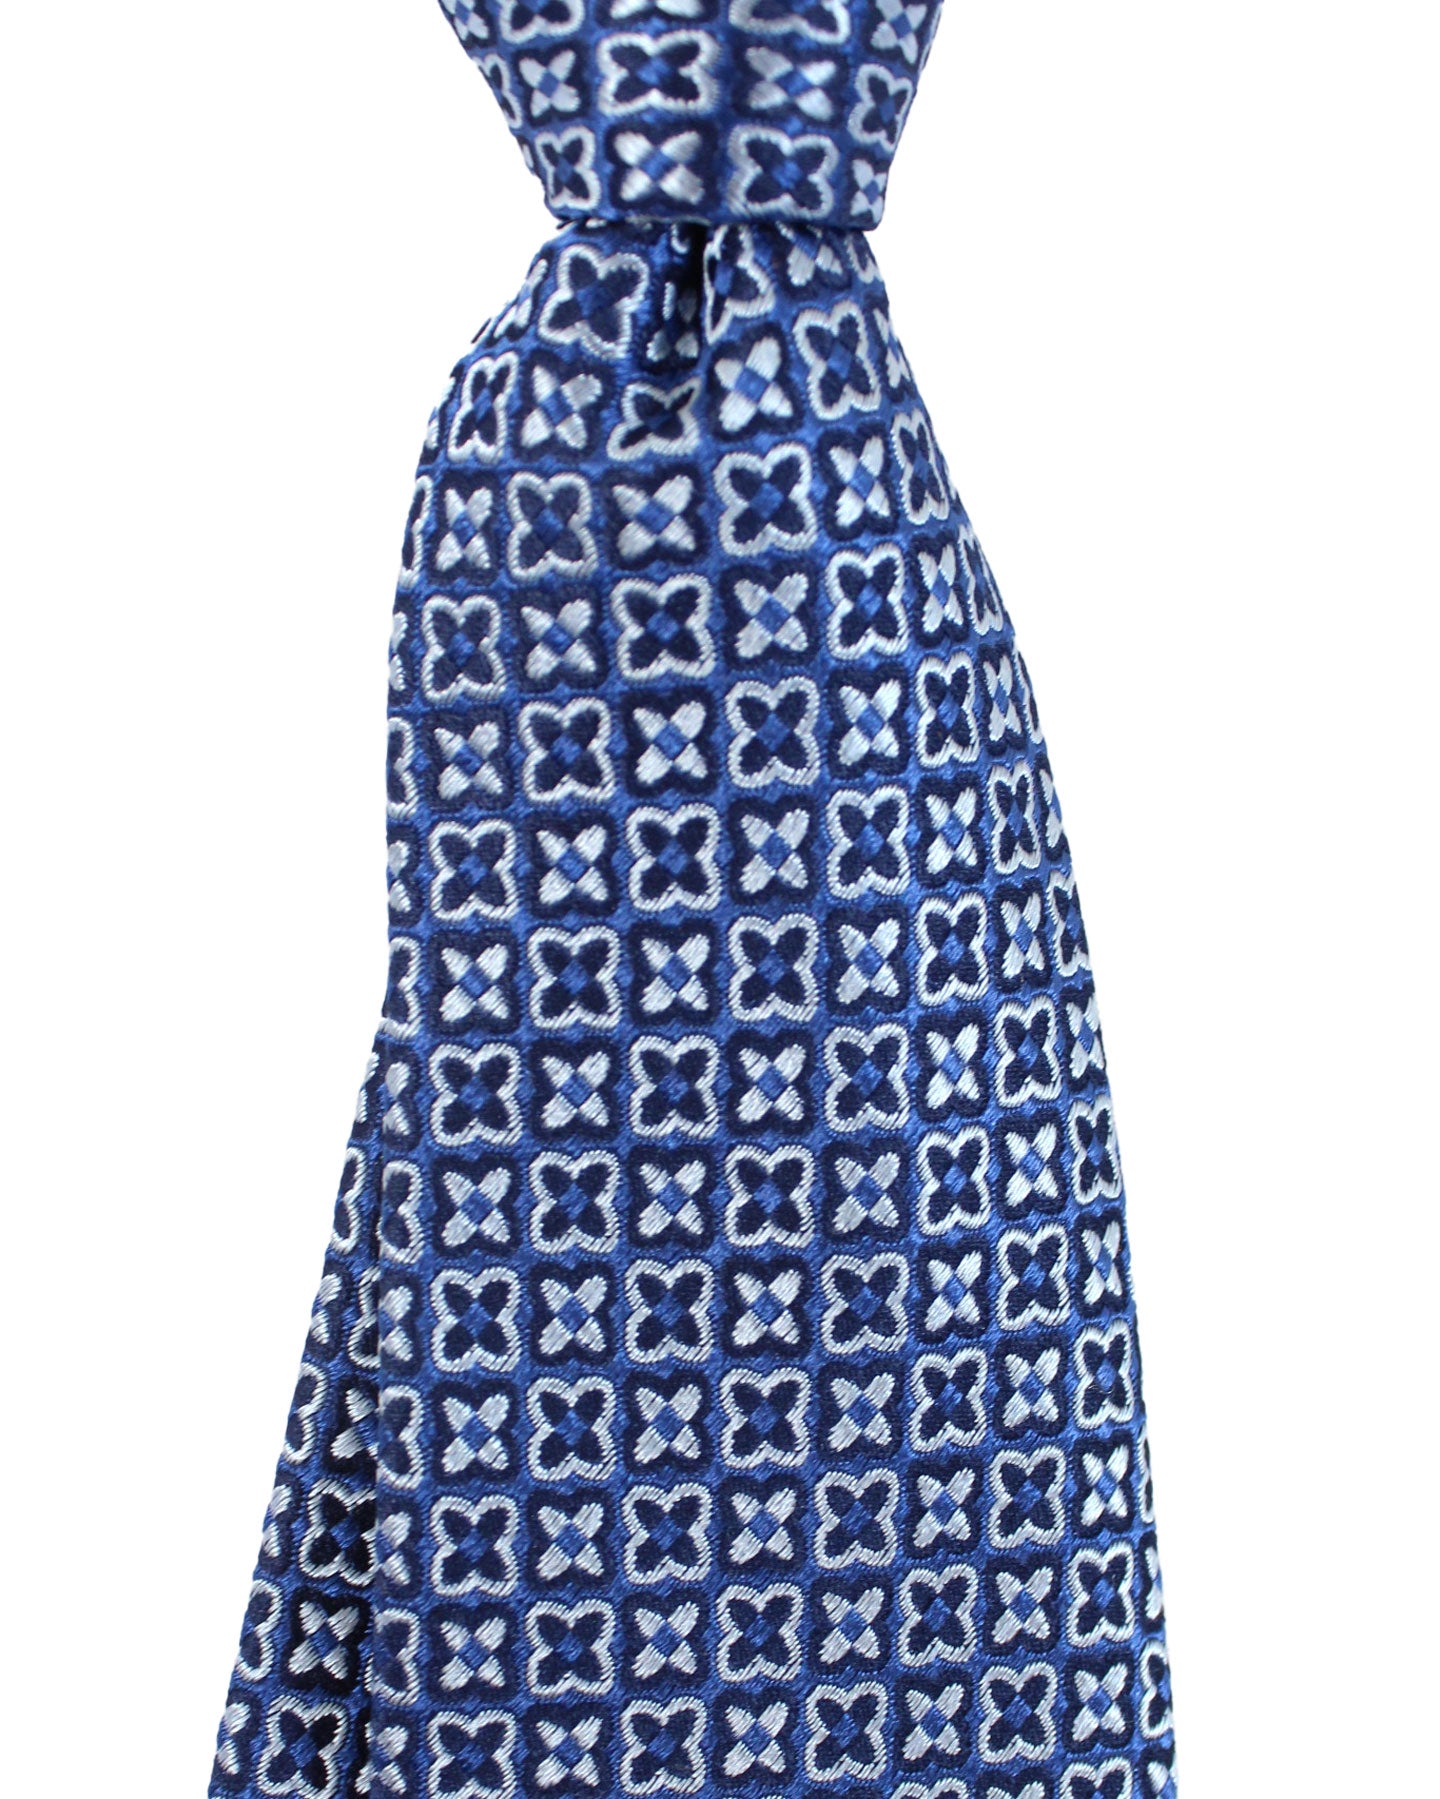 Massimo Valeri 11 Fold Tie Navy Gray Geometric - Elevenfold Necktie